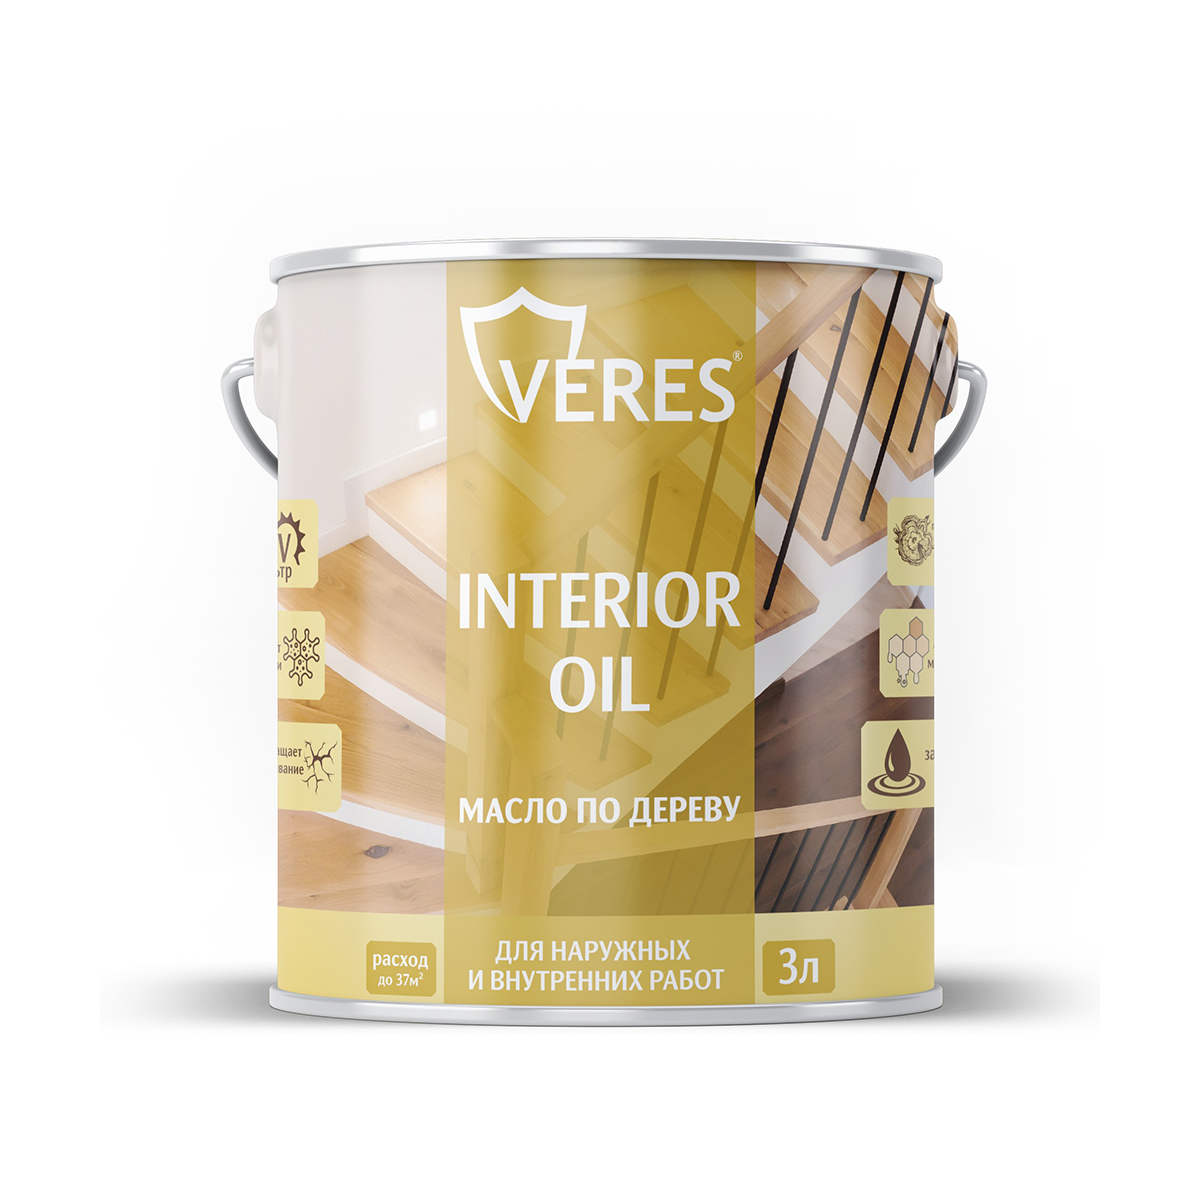 Масло для дерева Veres Interior Oil, 3 л, сосна масло для дерева vincent protection terrasse 2 25 л